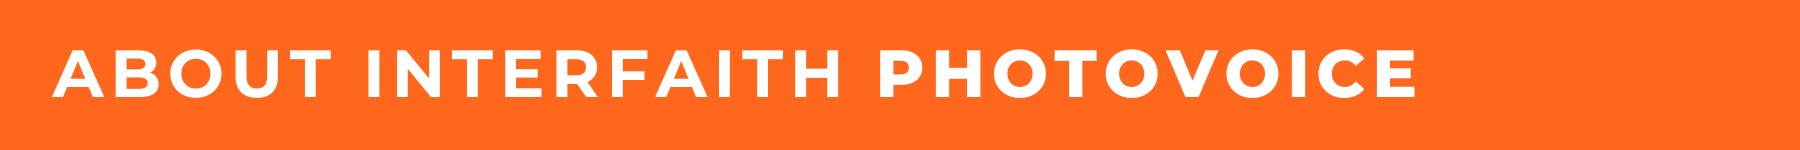 "About Interfaith Photovoice" banner - white writing on orange background